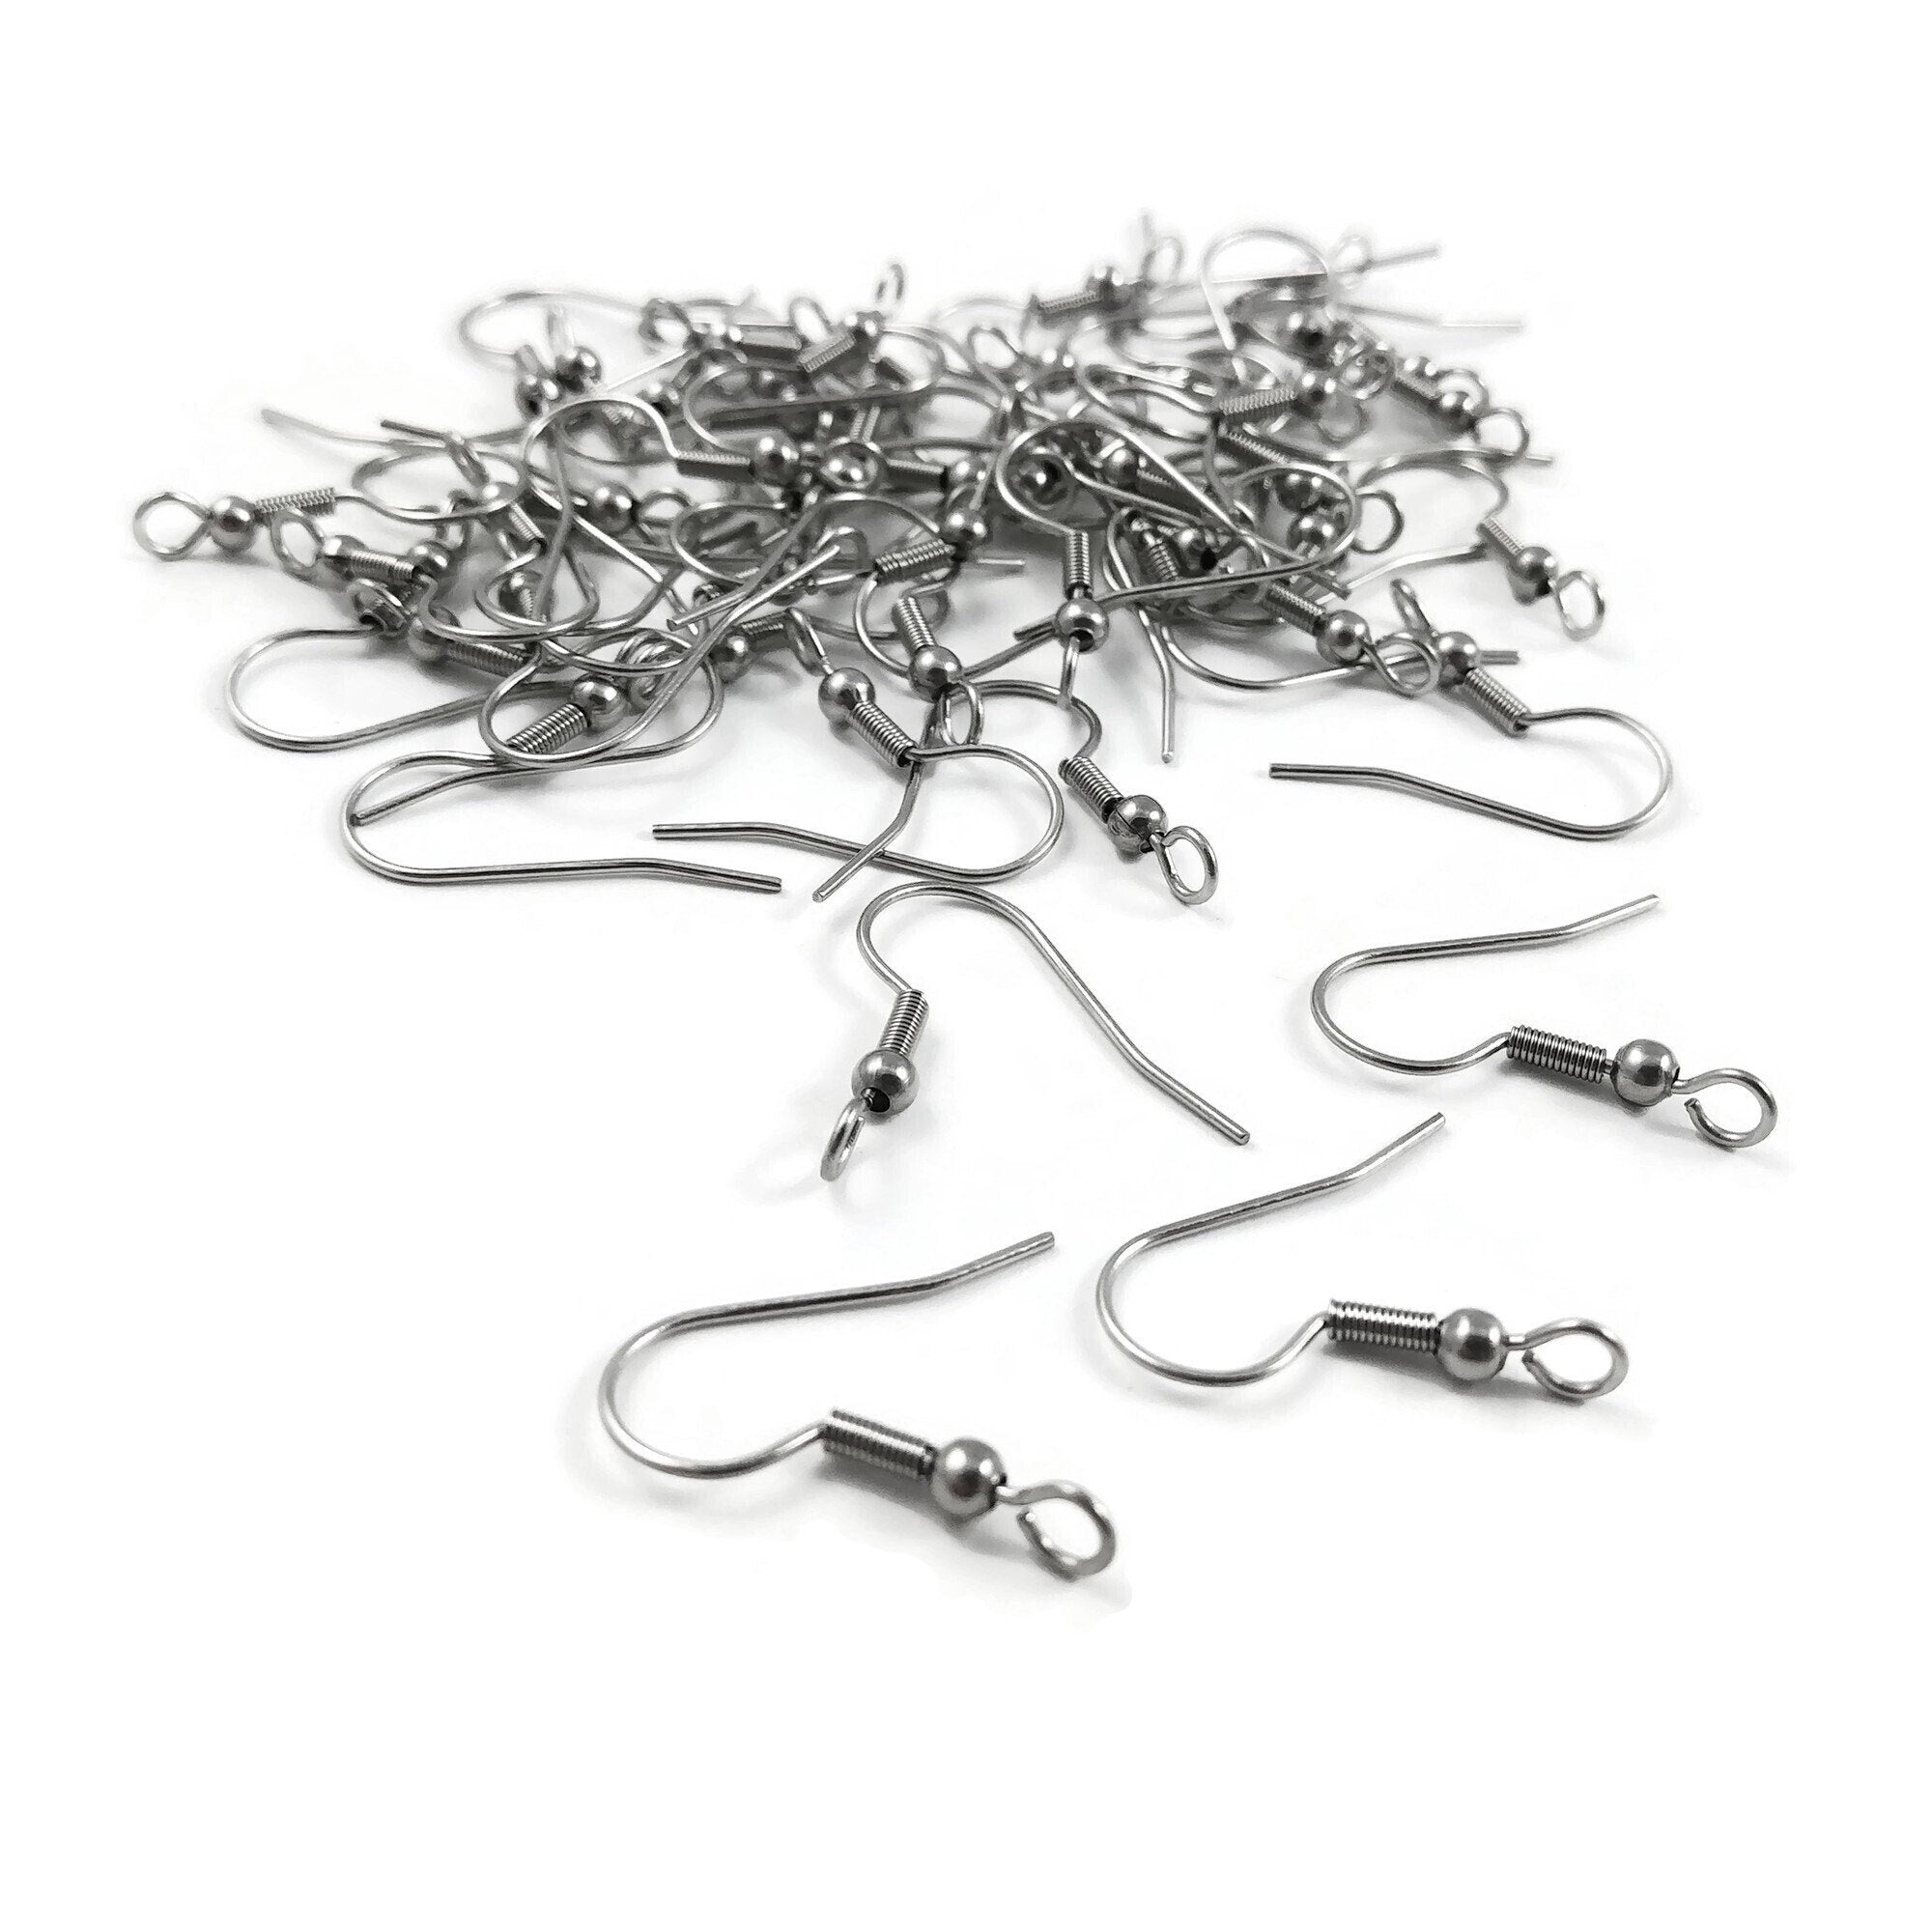 Stainless steel ear wires, Other side loop earring hooks, Hypoallergenic earring findings, 50 pcs (25 pairs)